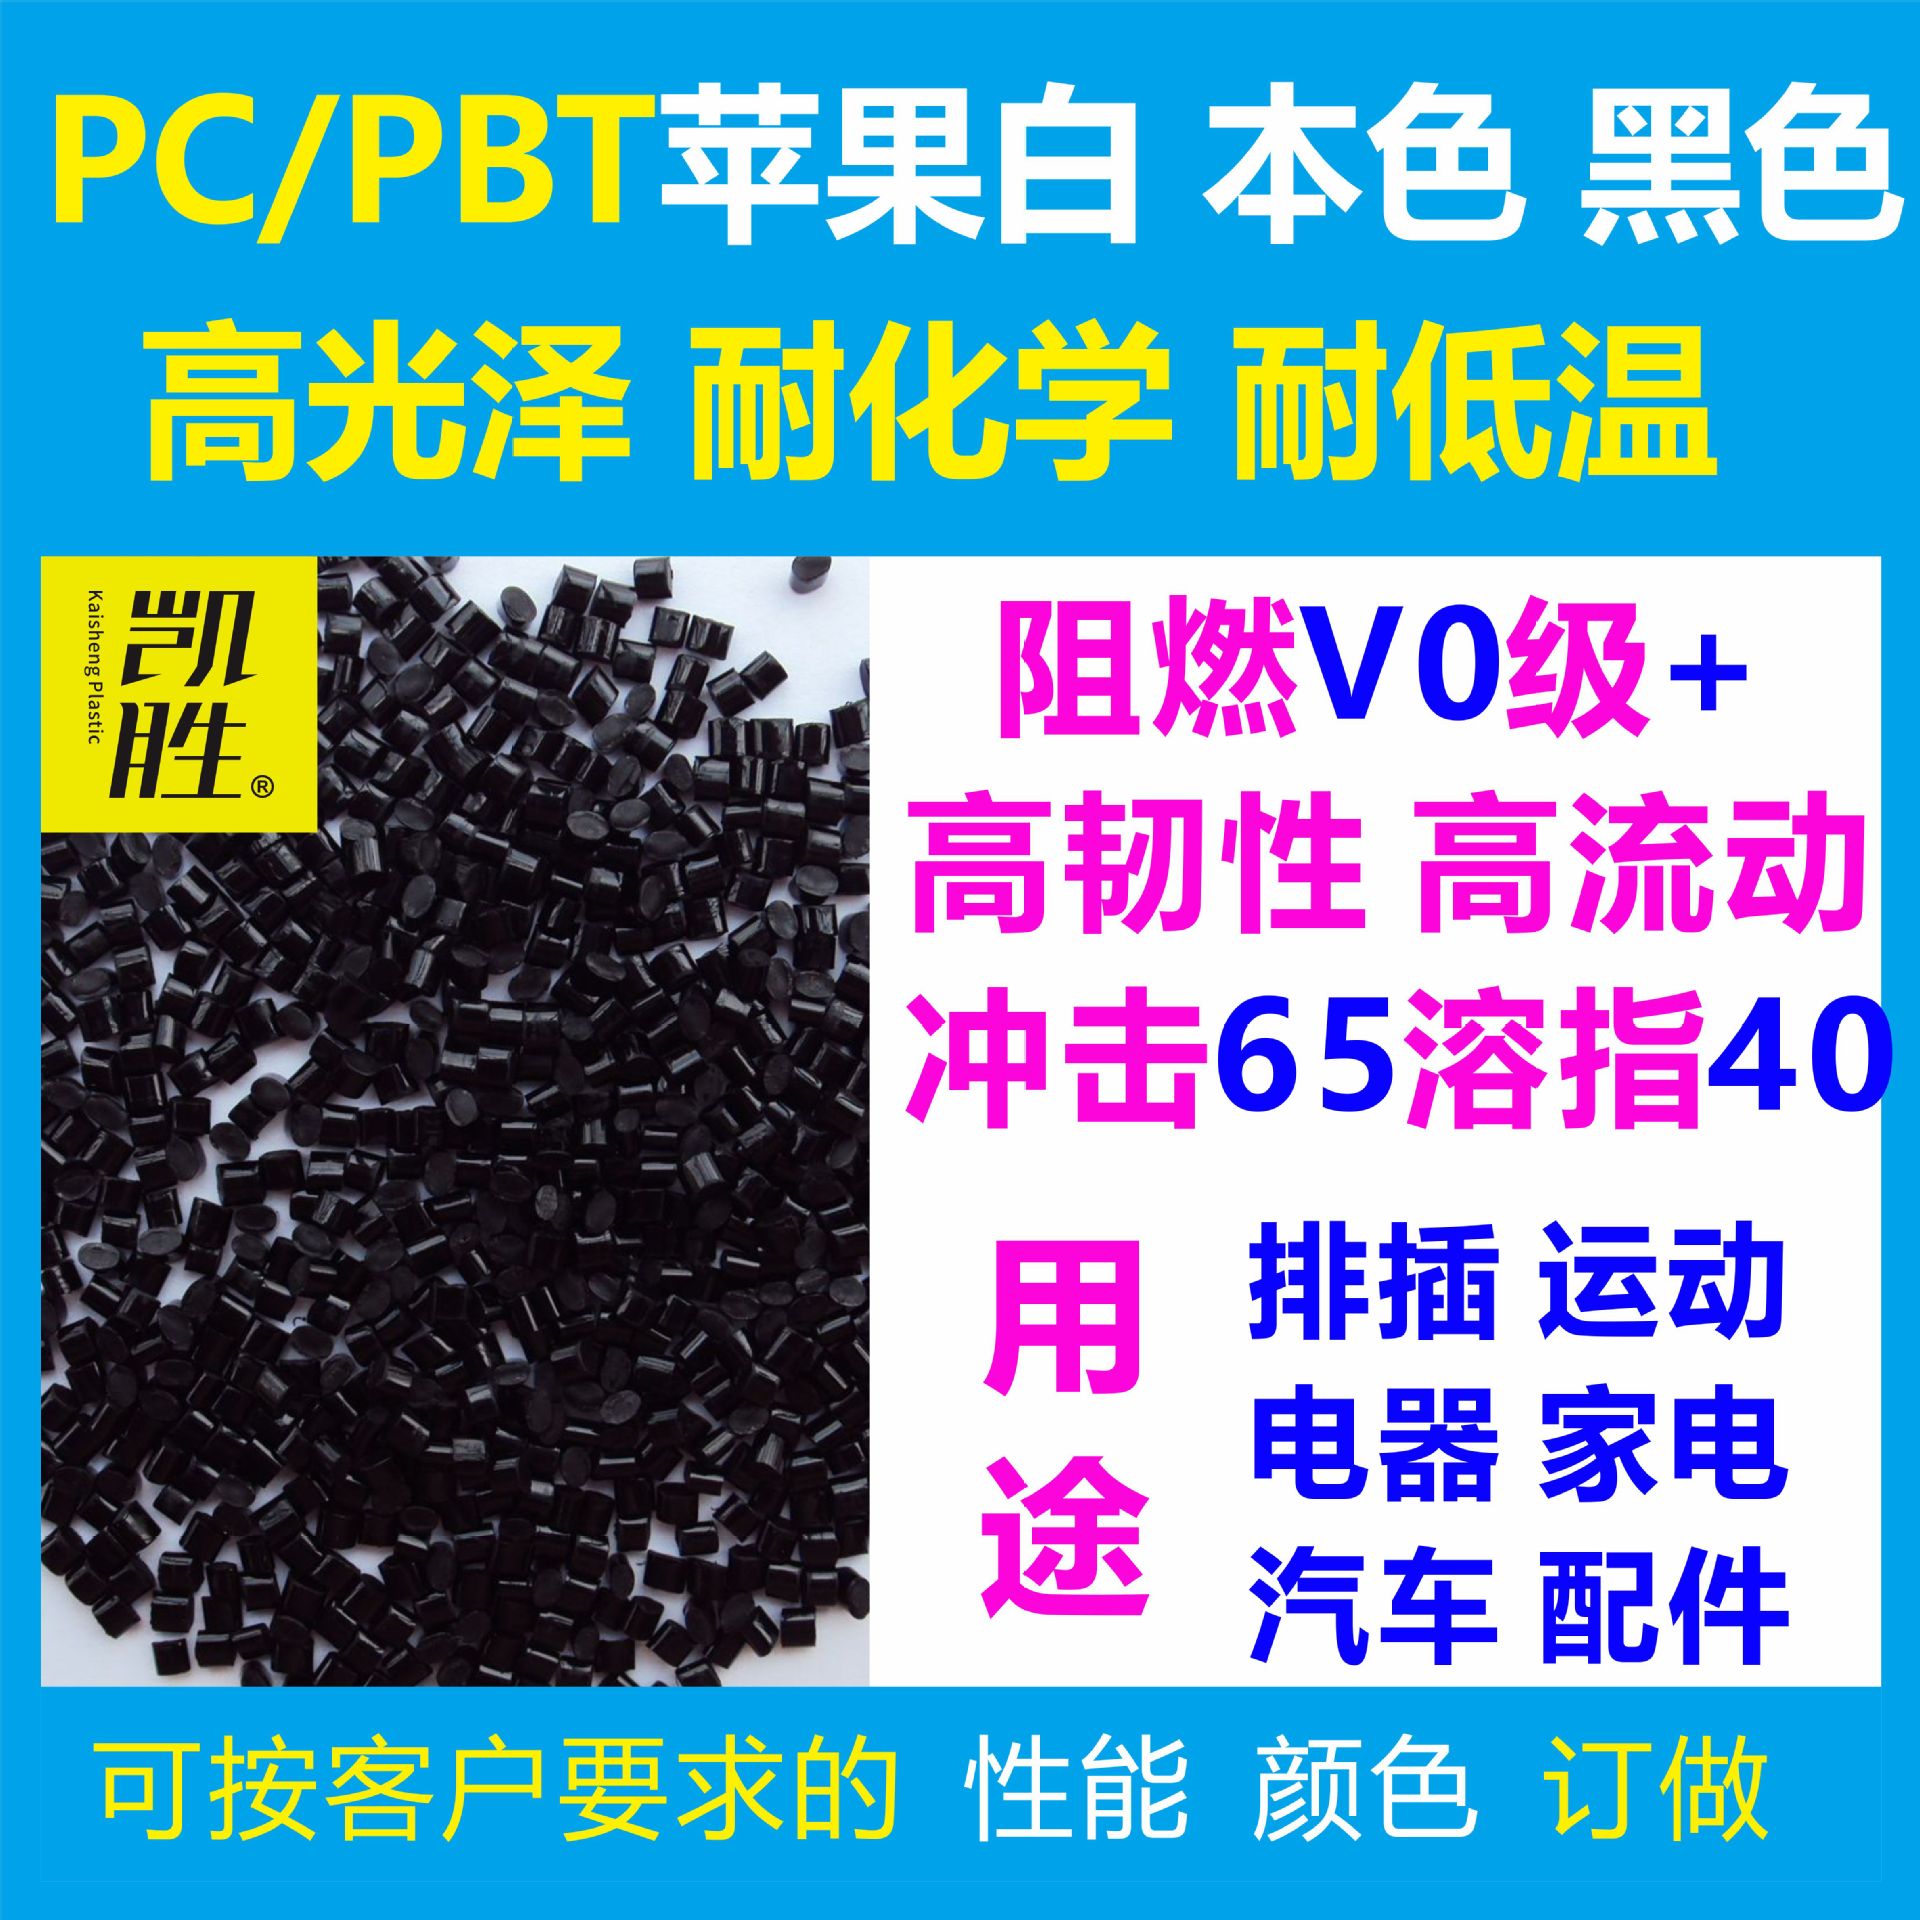 pcpbt阻燃级塑胶料黑耐化学耐低温高流动高韧韧pc pbt防火级塑料|ru